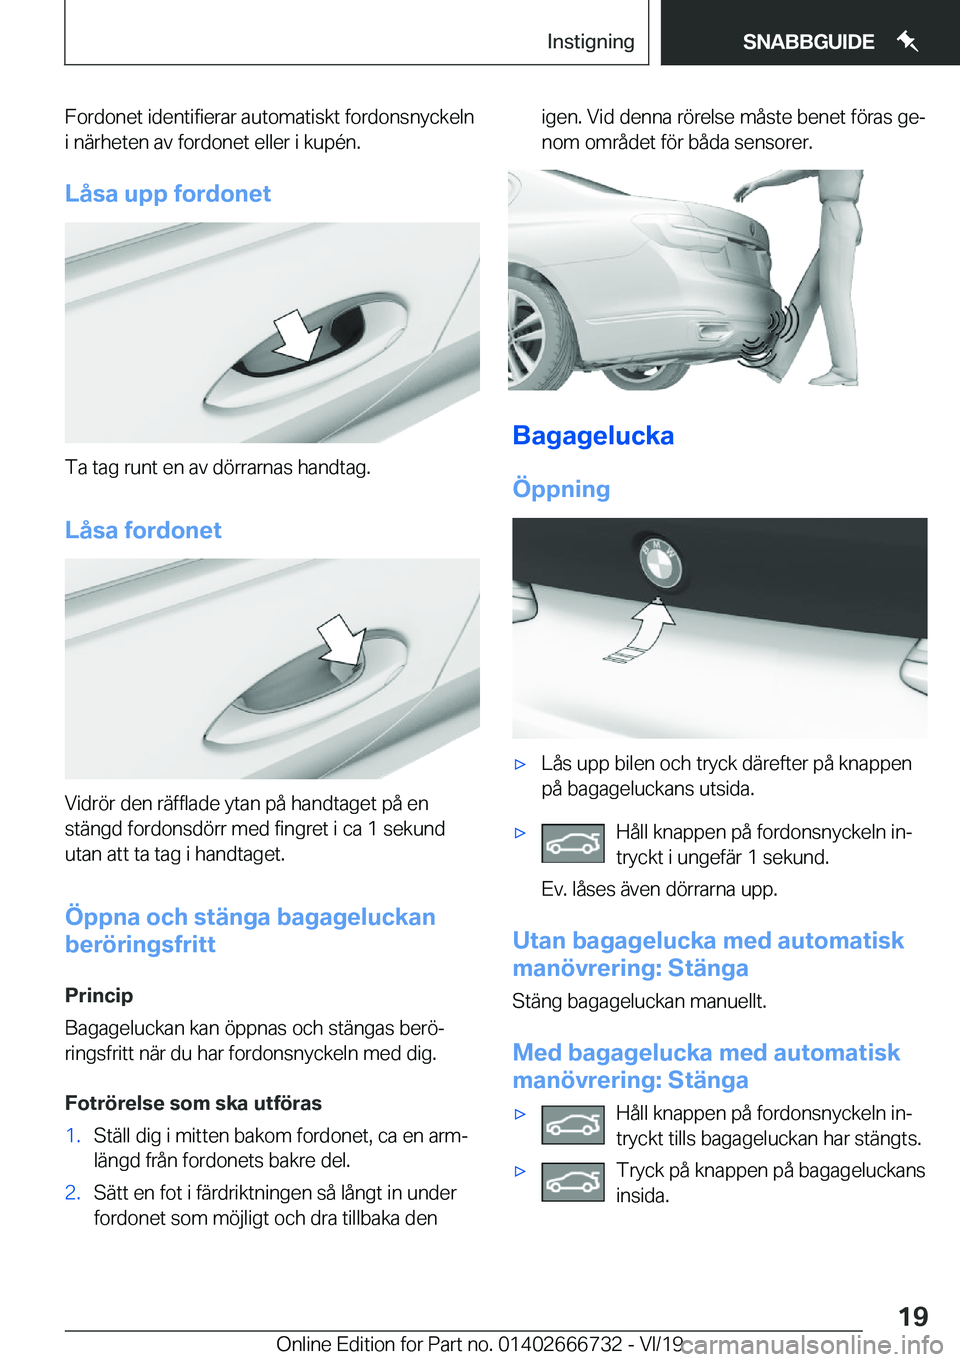 BMW M5 2020  InstruktionsbÖcker (in Swedish) �F�o�r�d�o�n�e�t��i�d�e�n�t�i�f�i�e�r�a�r��a�u�t�o�m�a�t�i�s�k�t��f�o�r�d�o�n�s�n�y�c�k�e�l�n
�i��n�ä�r�h�e�t�e�n��a�v��f�o�r�d�o�n�e�t��e�l�l�e�r��i��k�u�p�